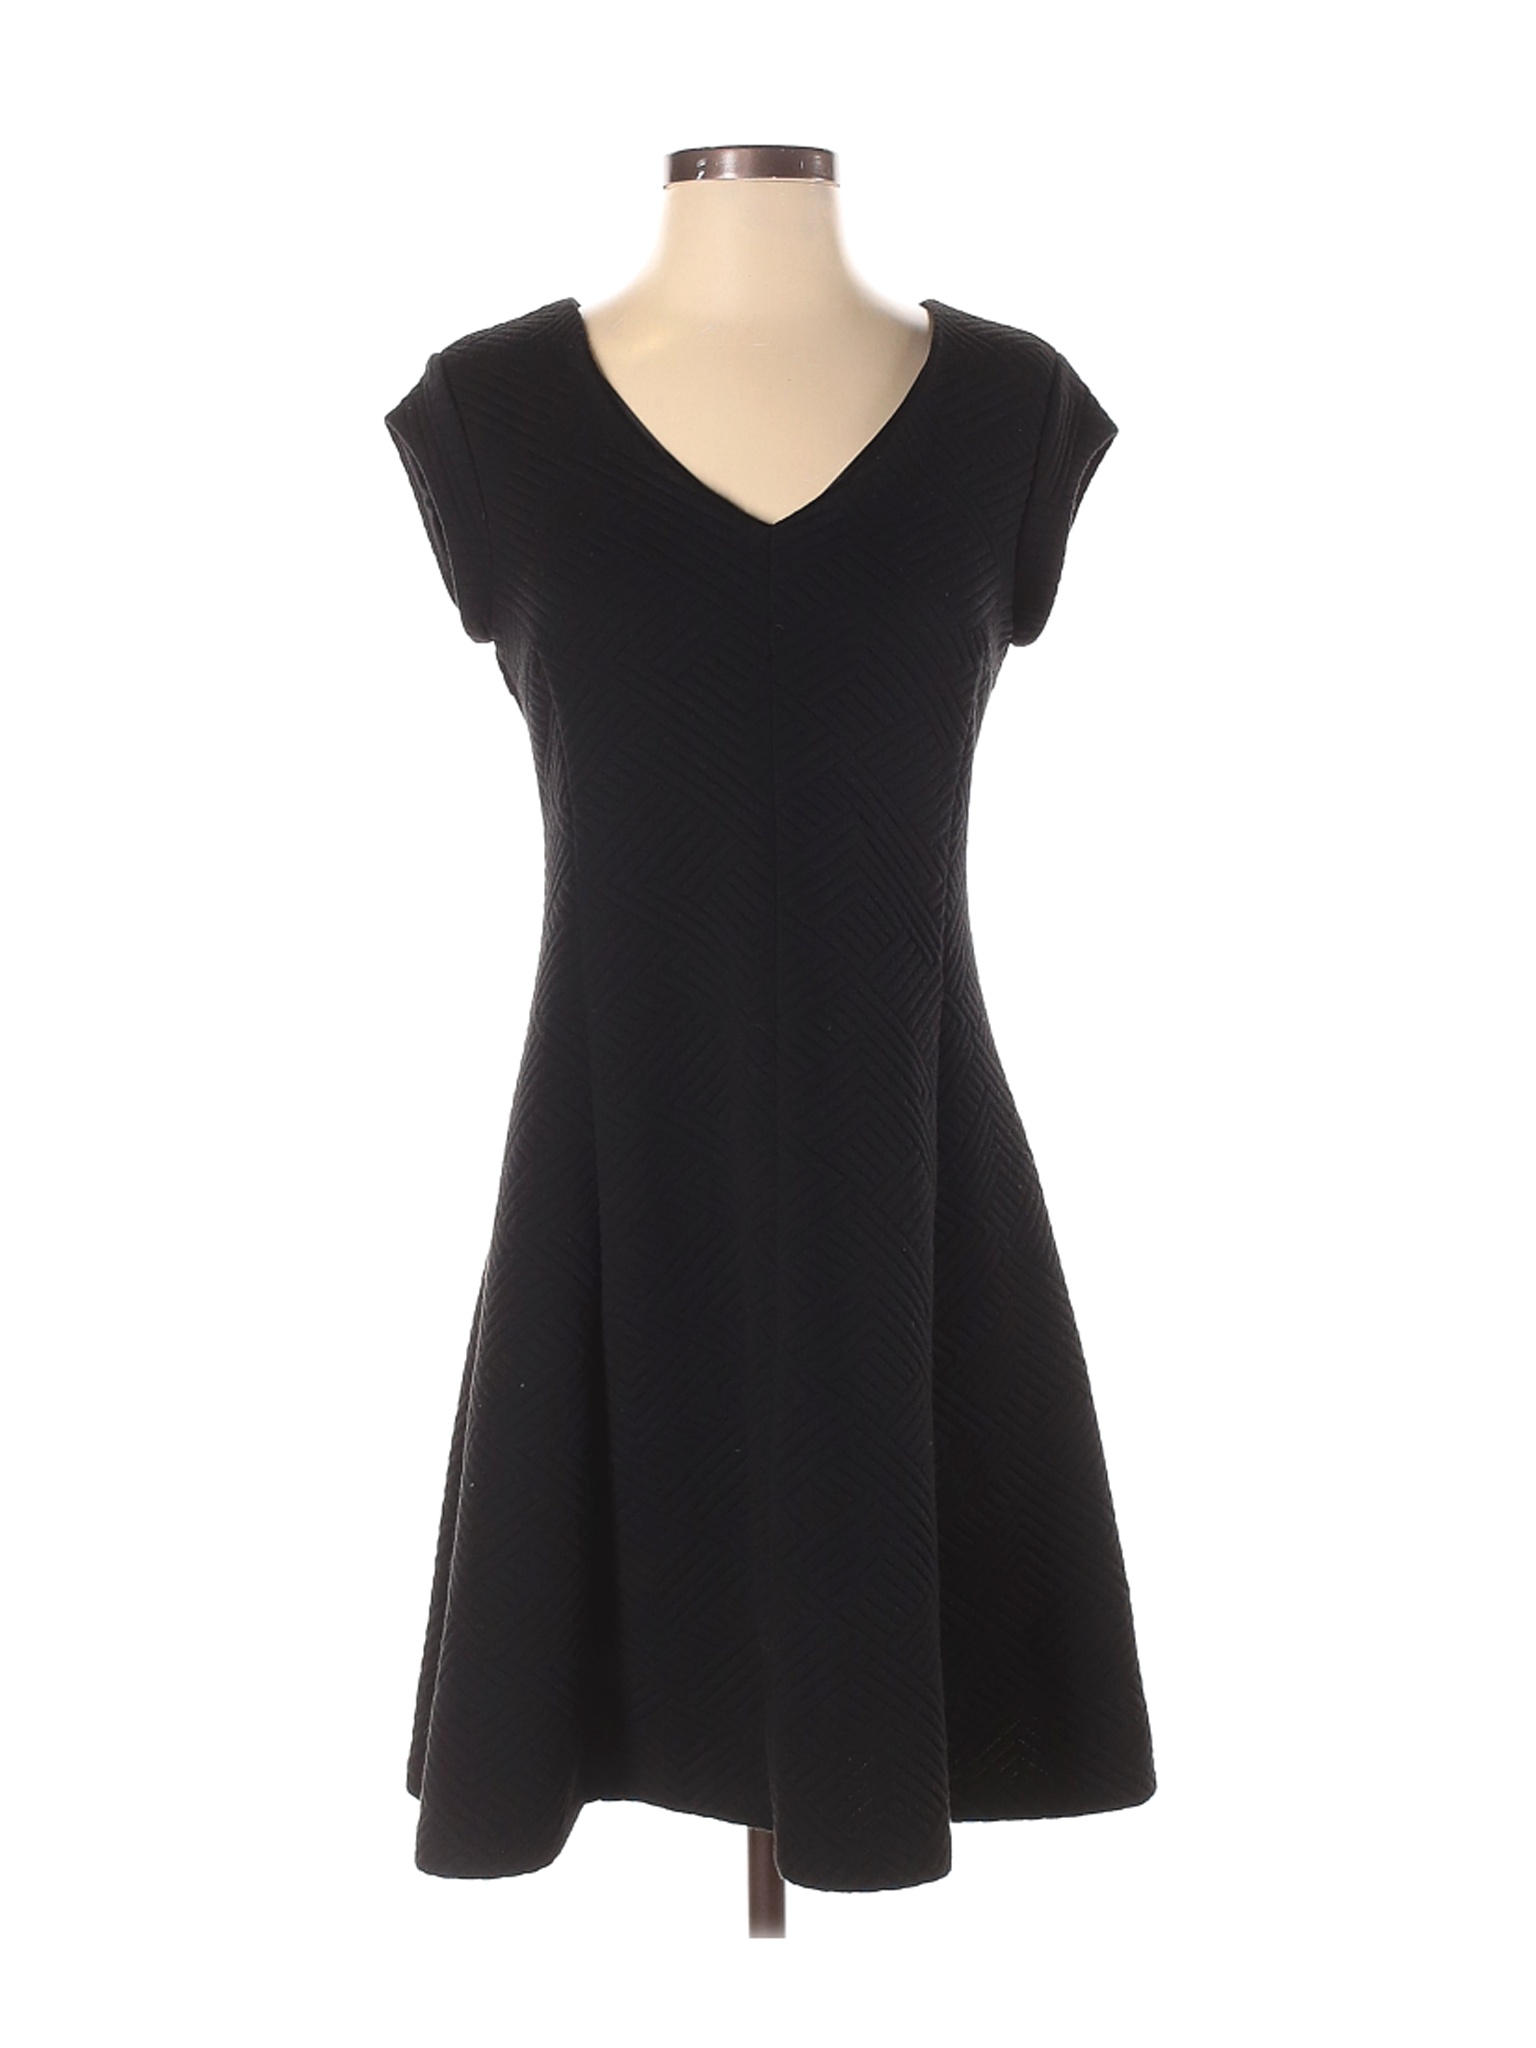 Adrienne Vittadini Women Black Casual Dress 2 | eBay